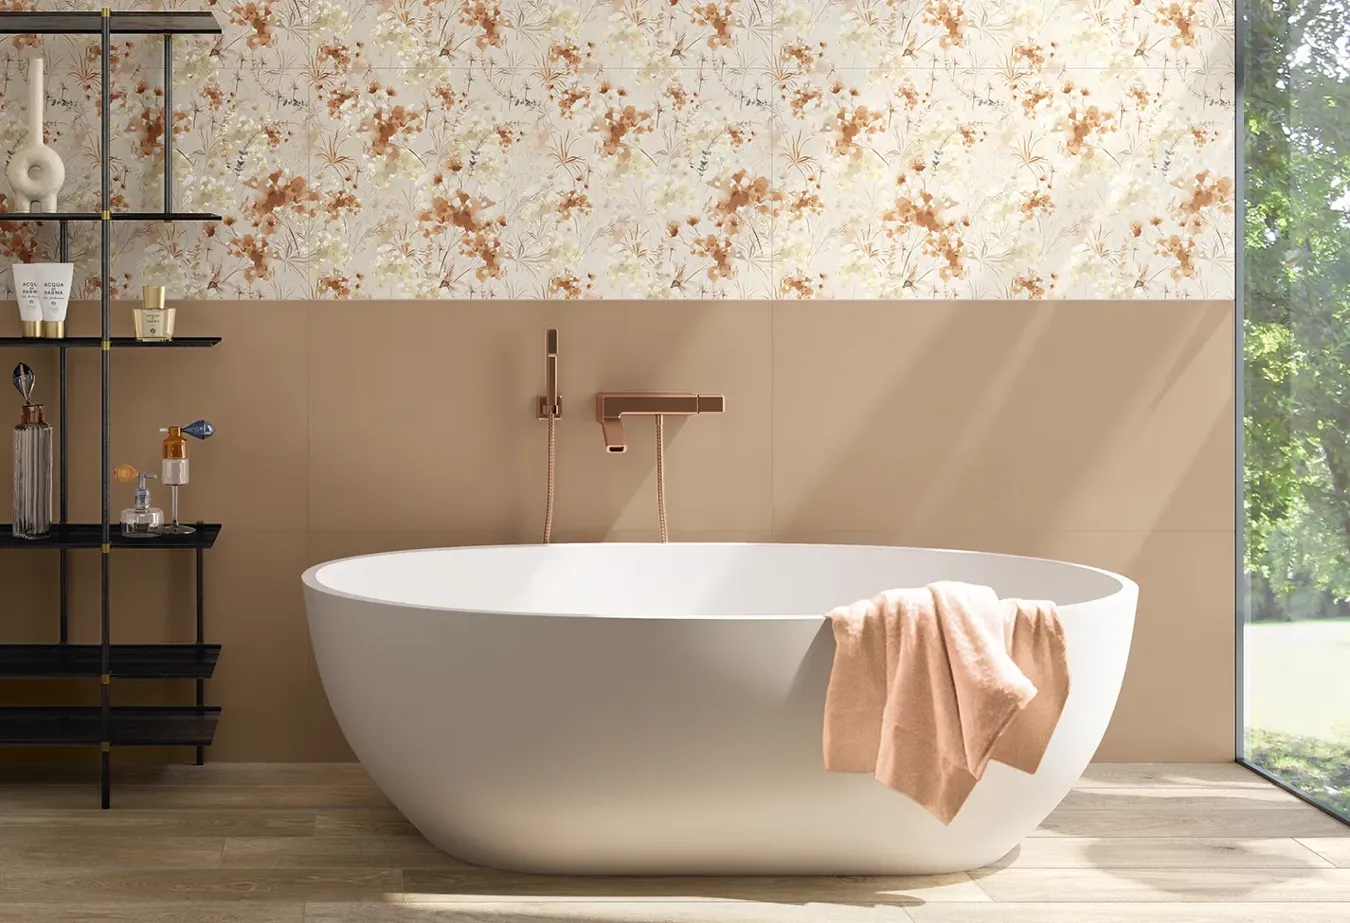 Explore liveliness: coloured bathroom tiles